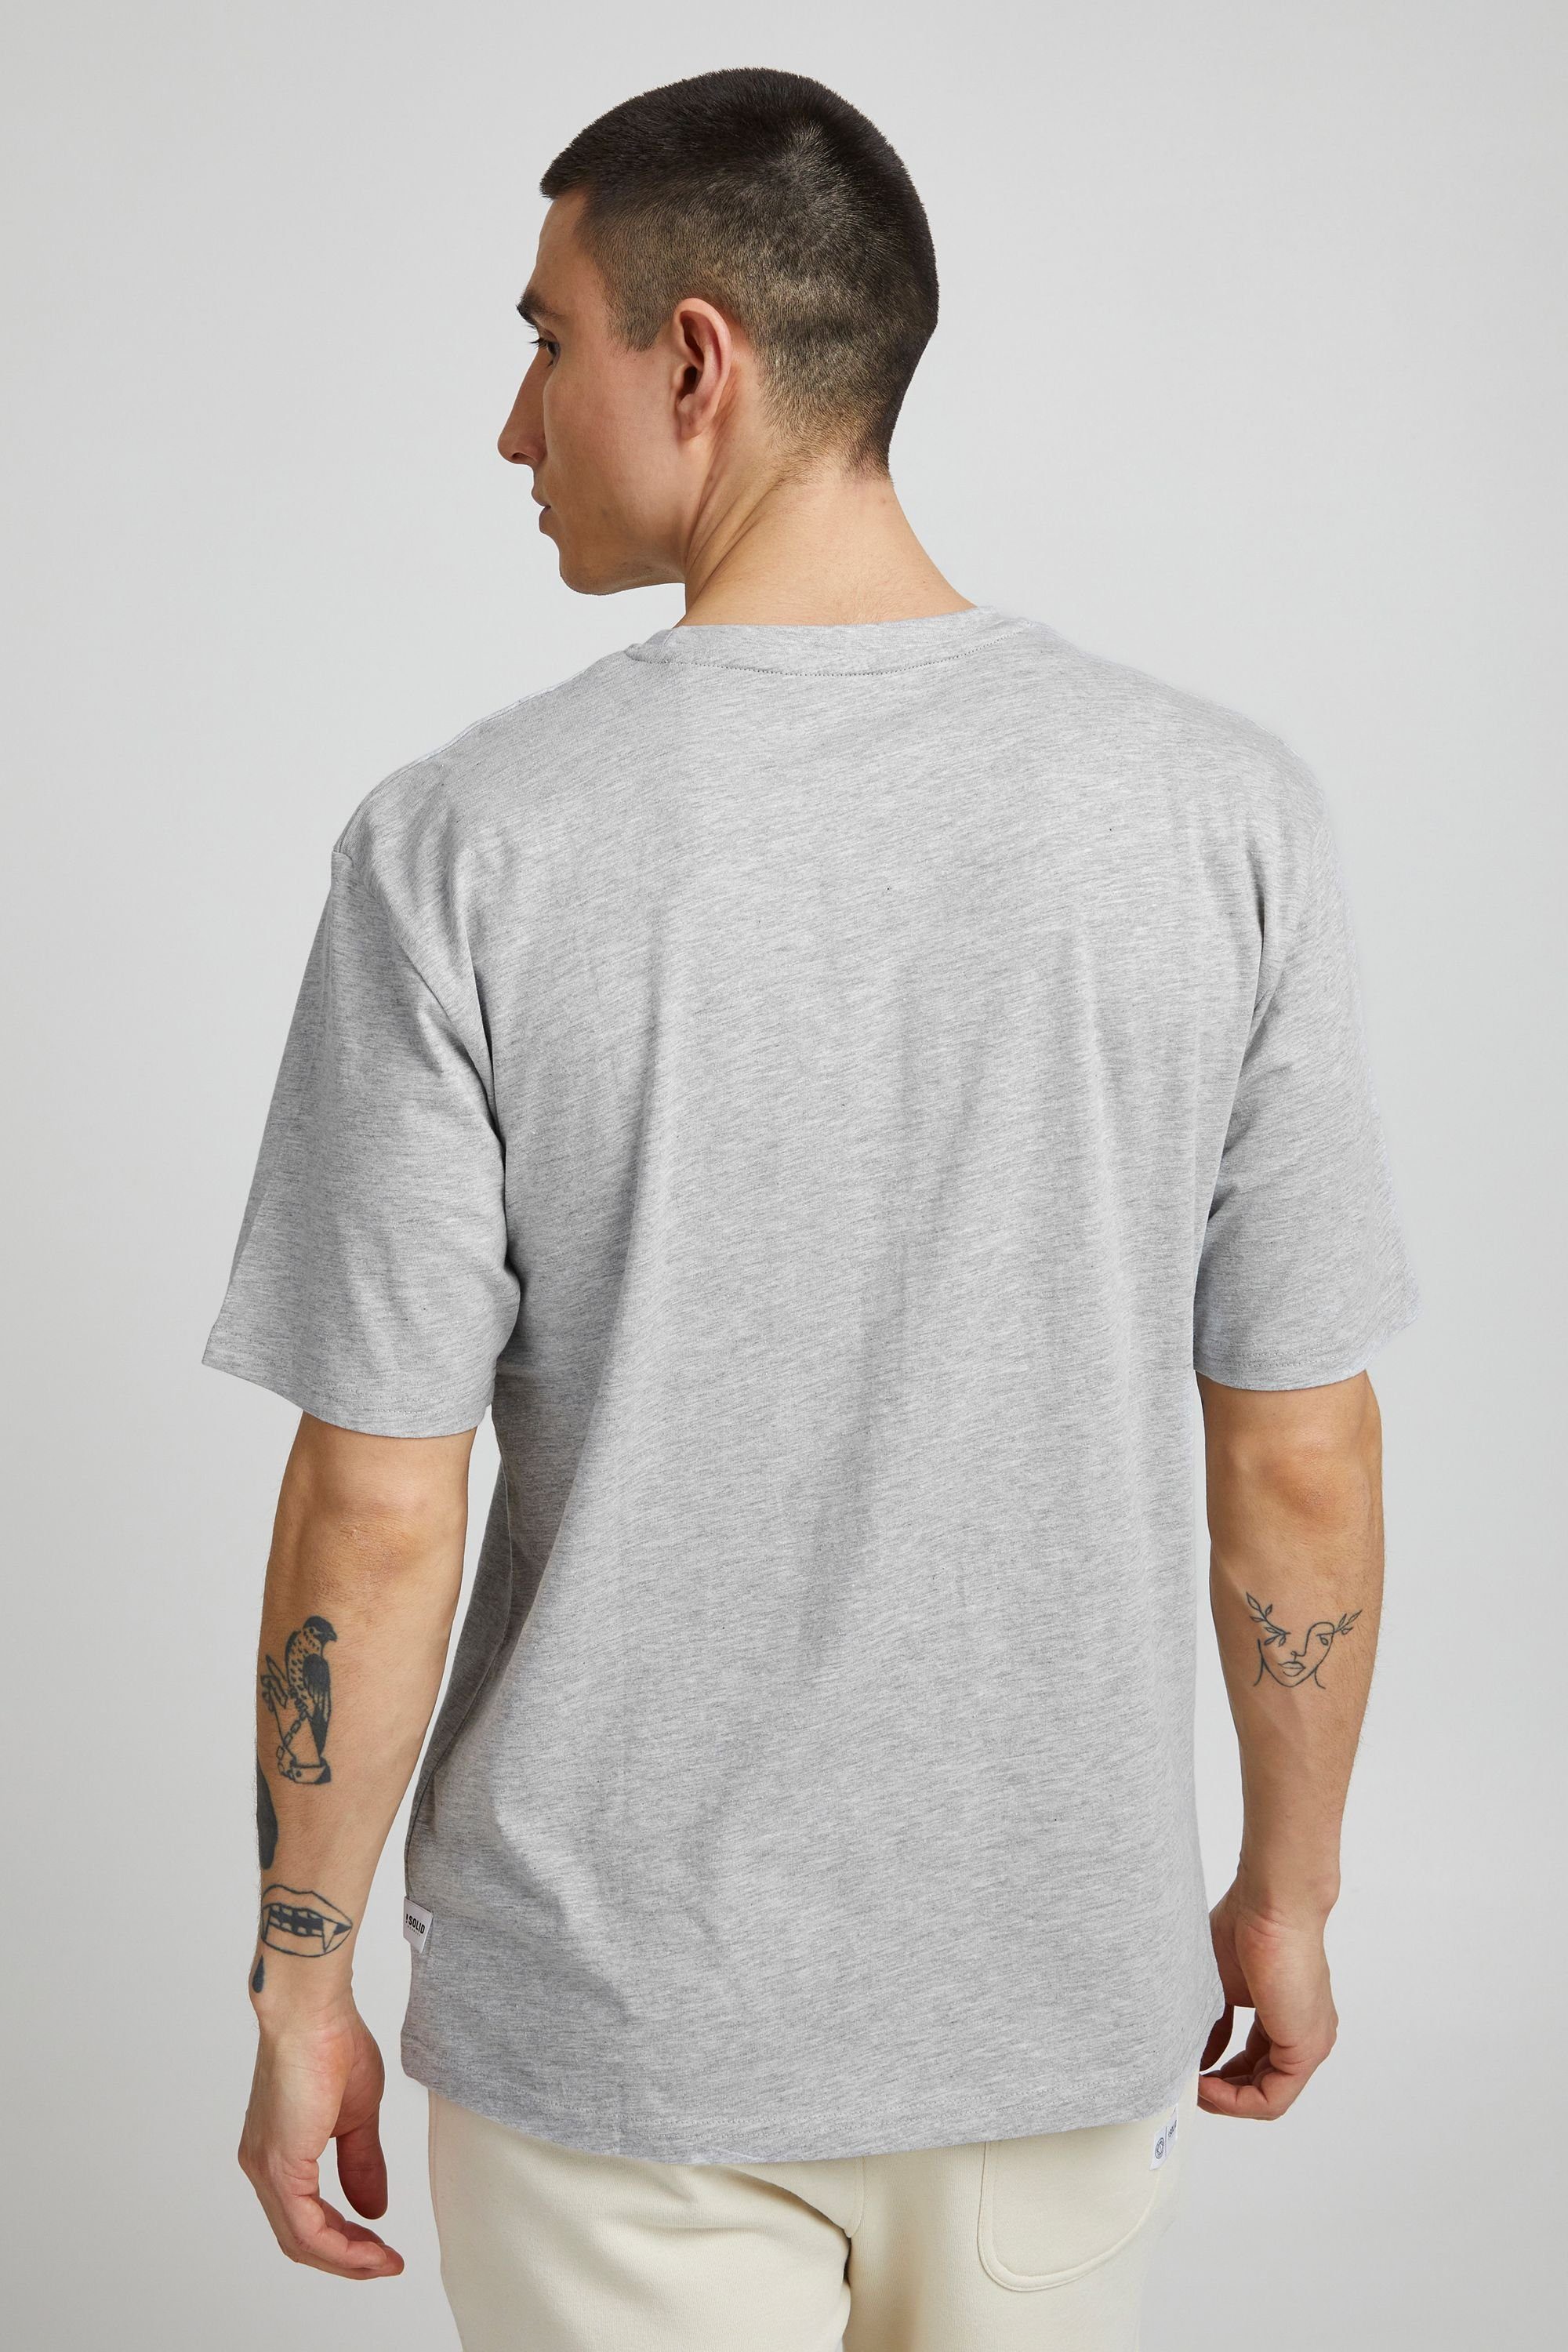 !Solid Light SDRui Grey (1541011) T-Shirt Melange